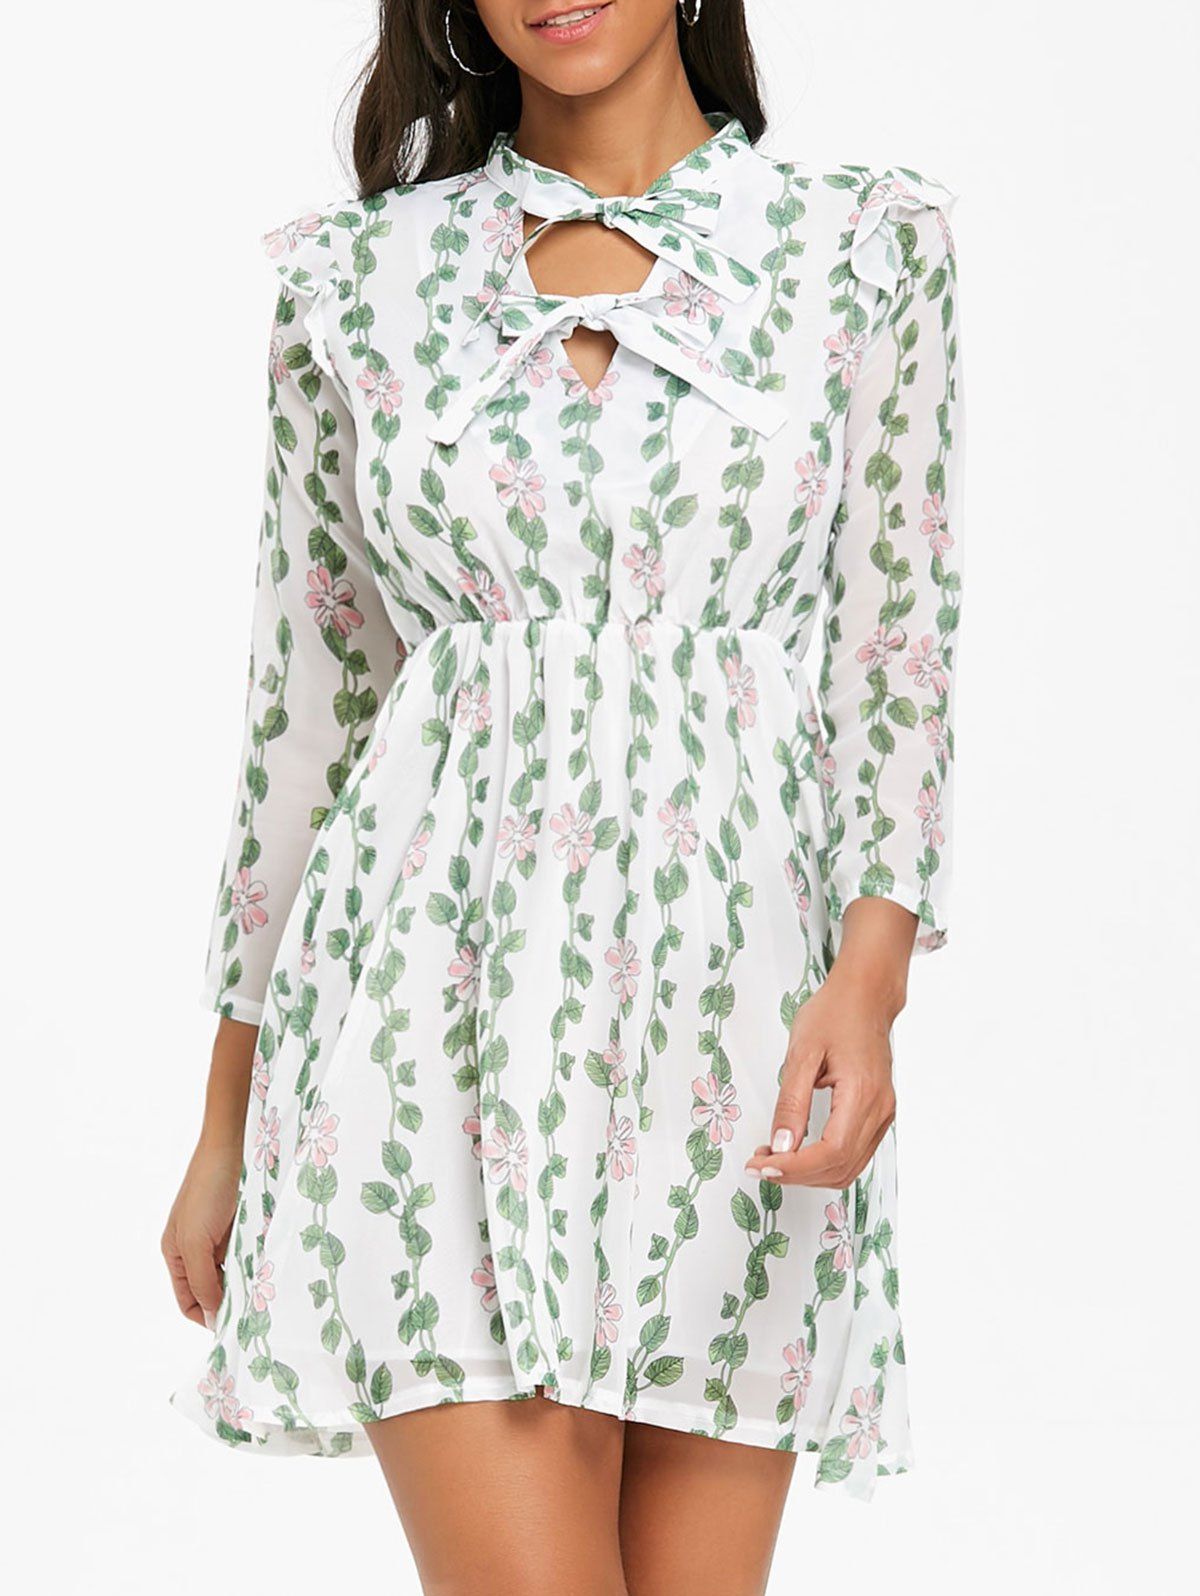 Floral Leaves Print Bow Neck Mini Dress - WHITE/GREEN XL